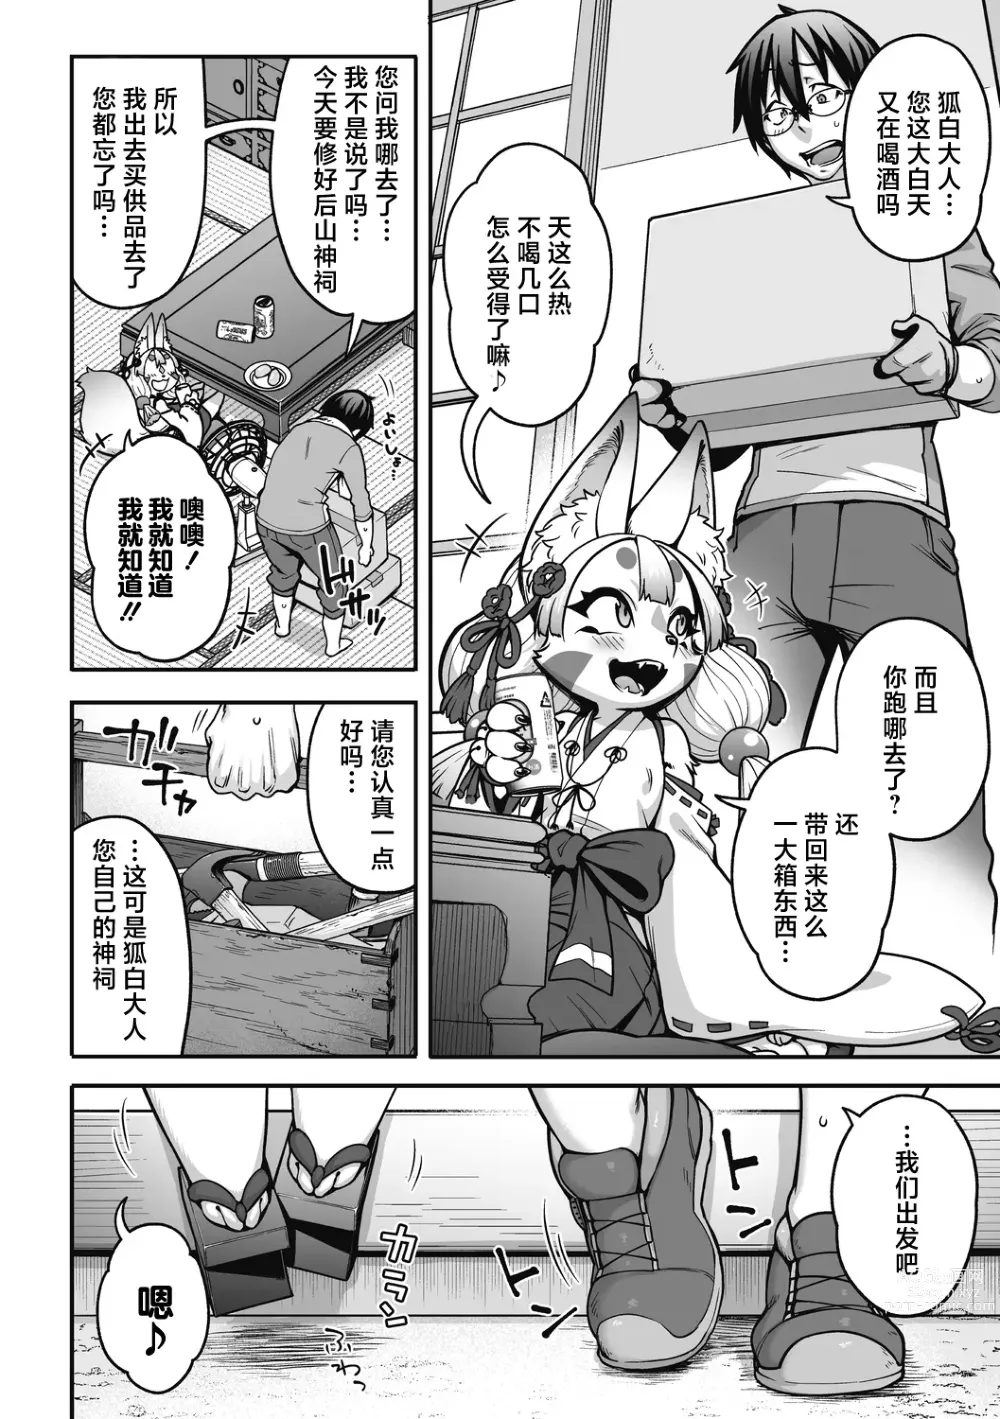 Page 3 of manga Otsukare!! Konkon Kohaku-sama